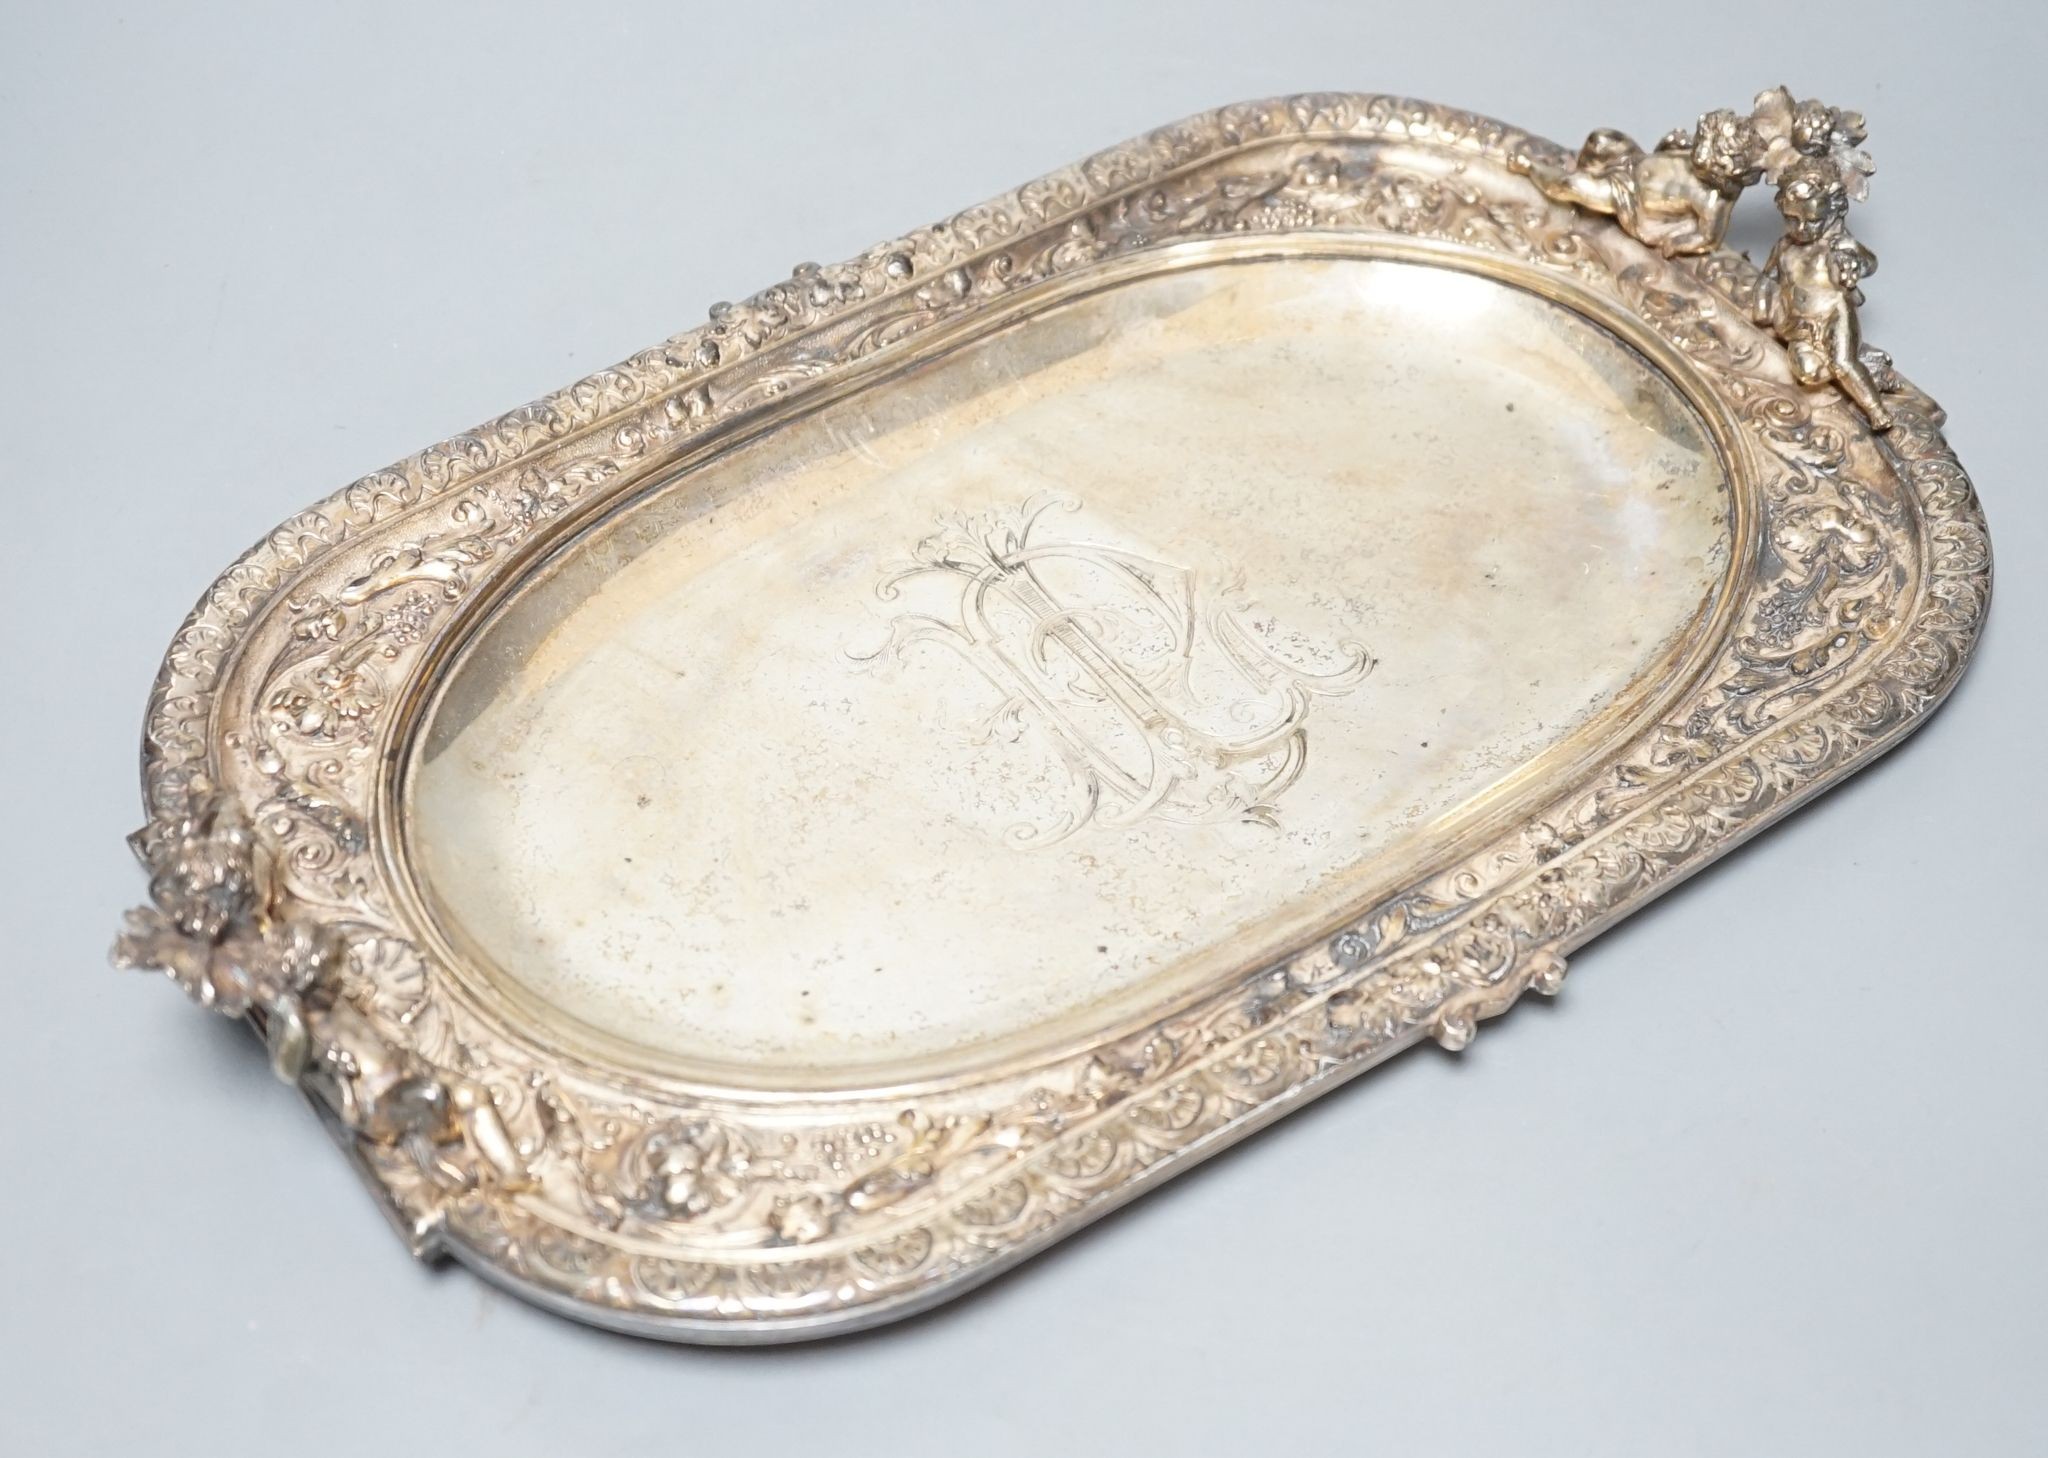 A Victorian cherub handled plated tray 40cm